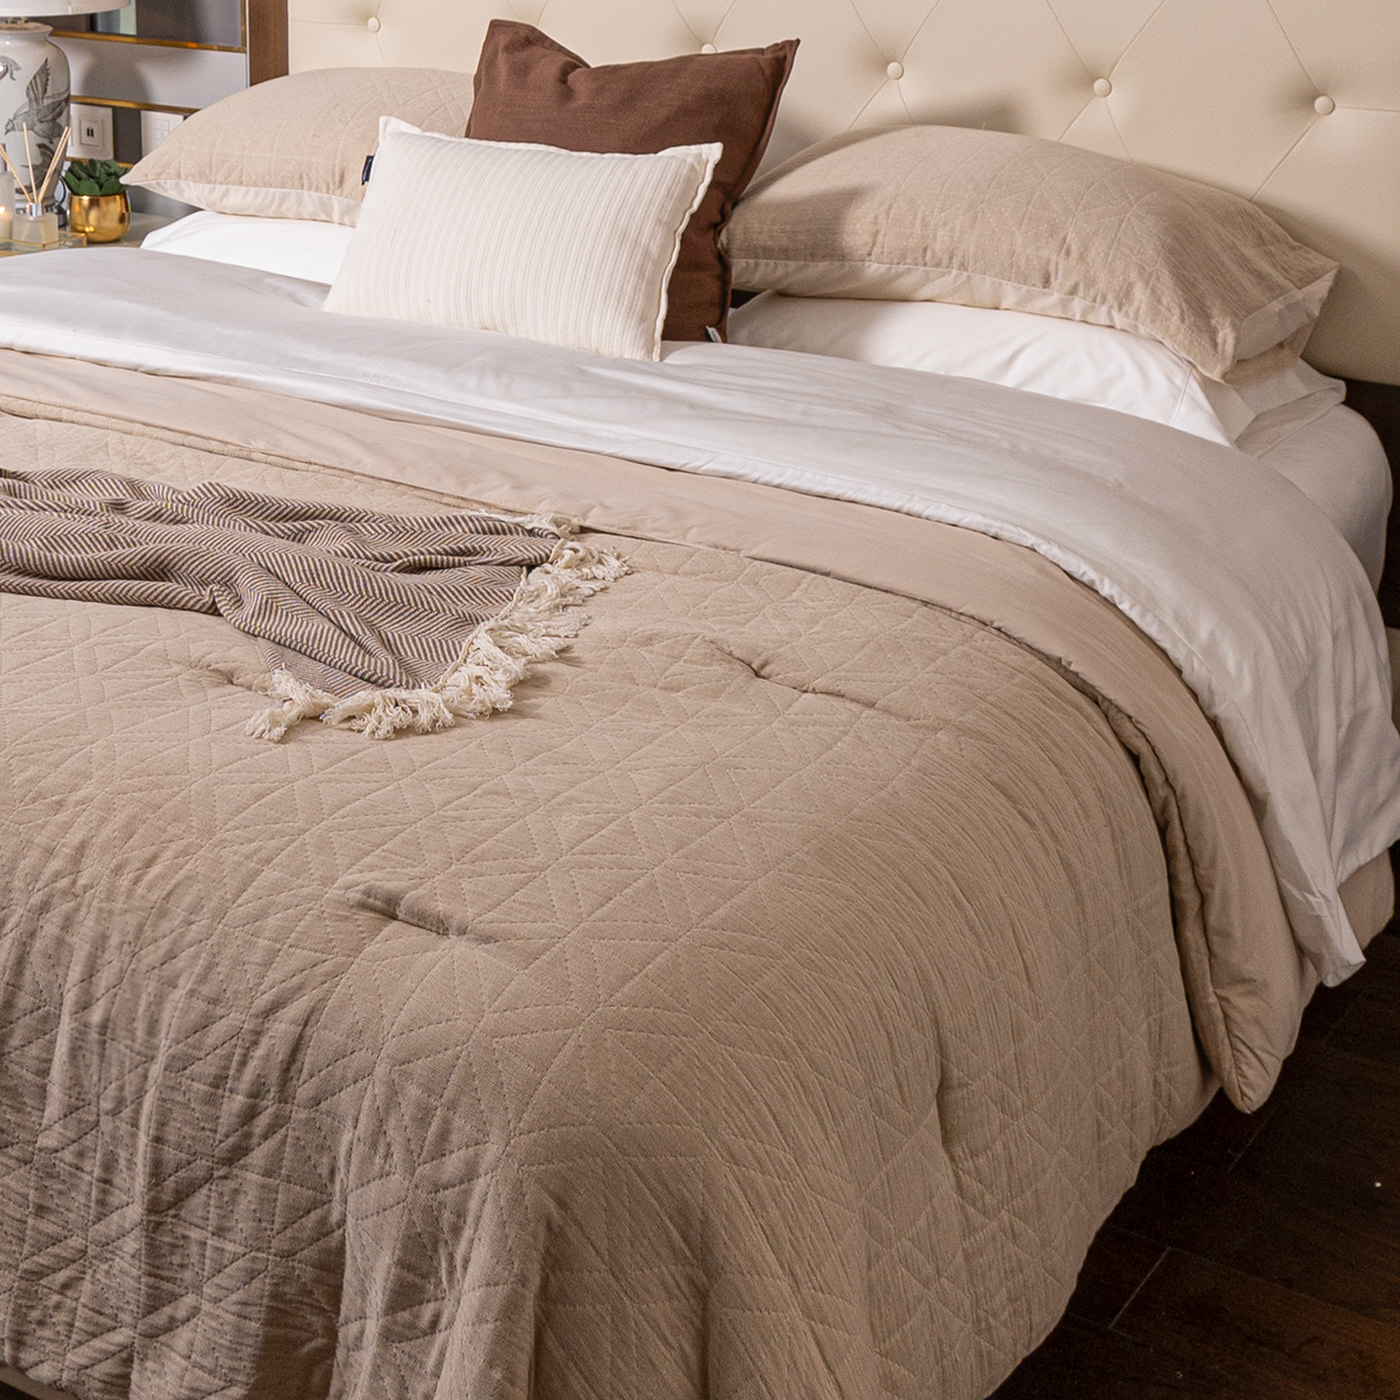 indoor bedding bedding set linen textile pattern Photography  bed linens Bed photography bedding sheets